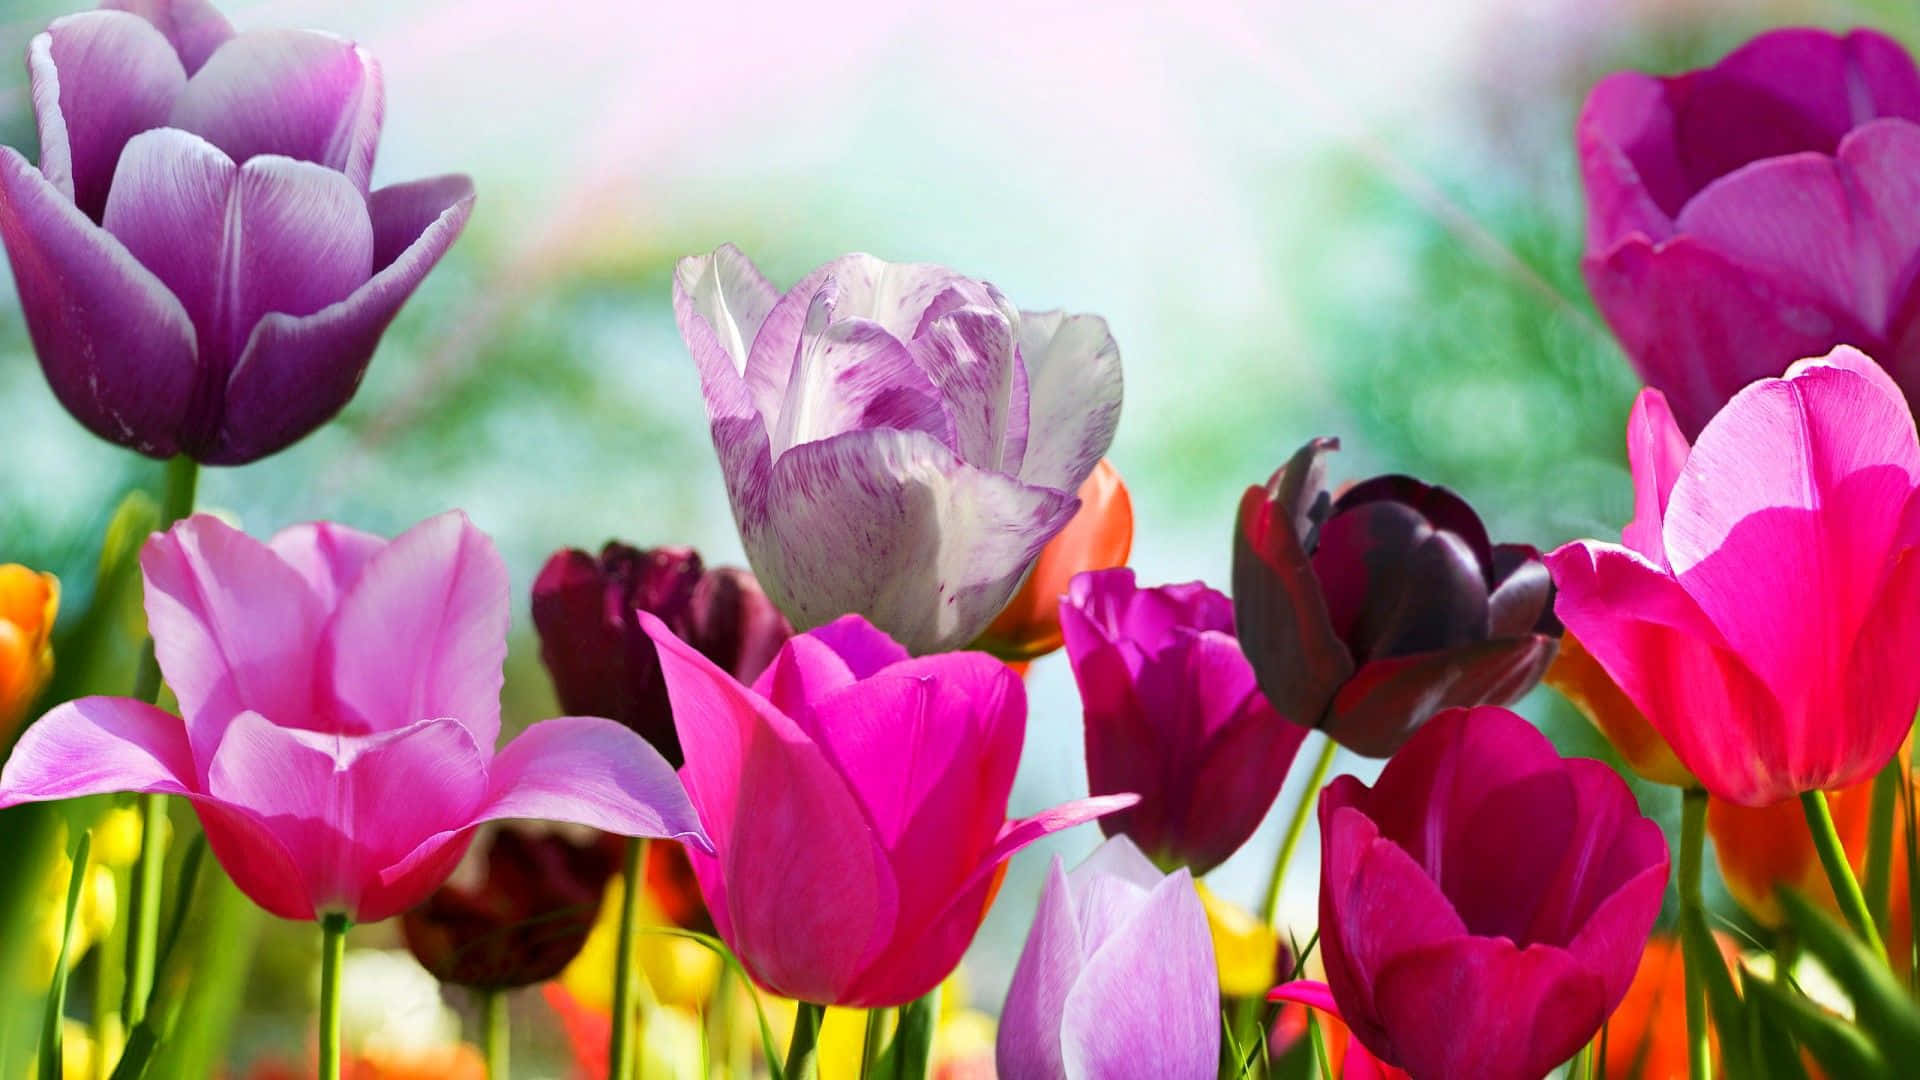 Vibrant Spring Flowers in Full Bloom against a Serene Background